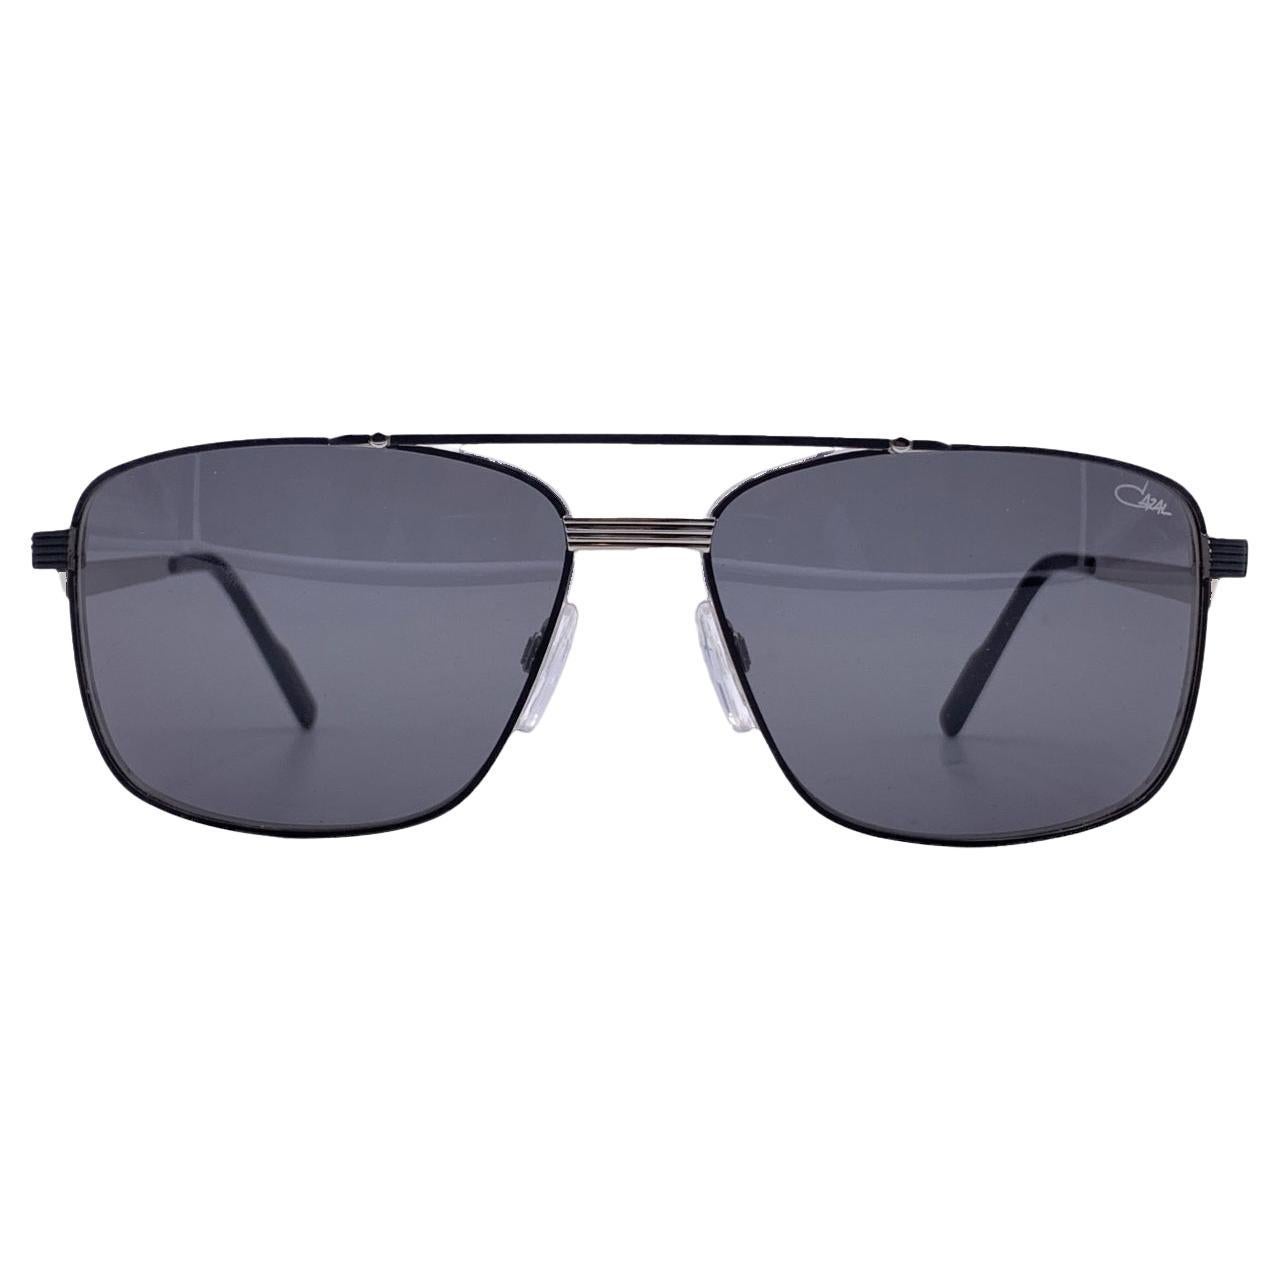 Cazal Black Metal Aviator Sunglasses Mod. 9101 002 63/16 140 mm For Sale